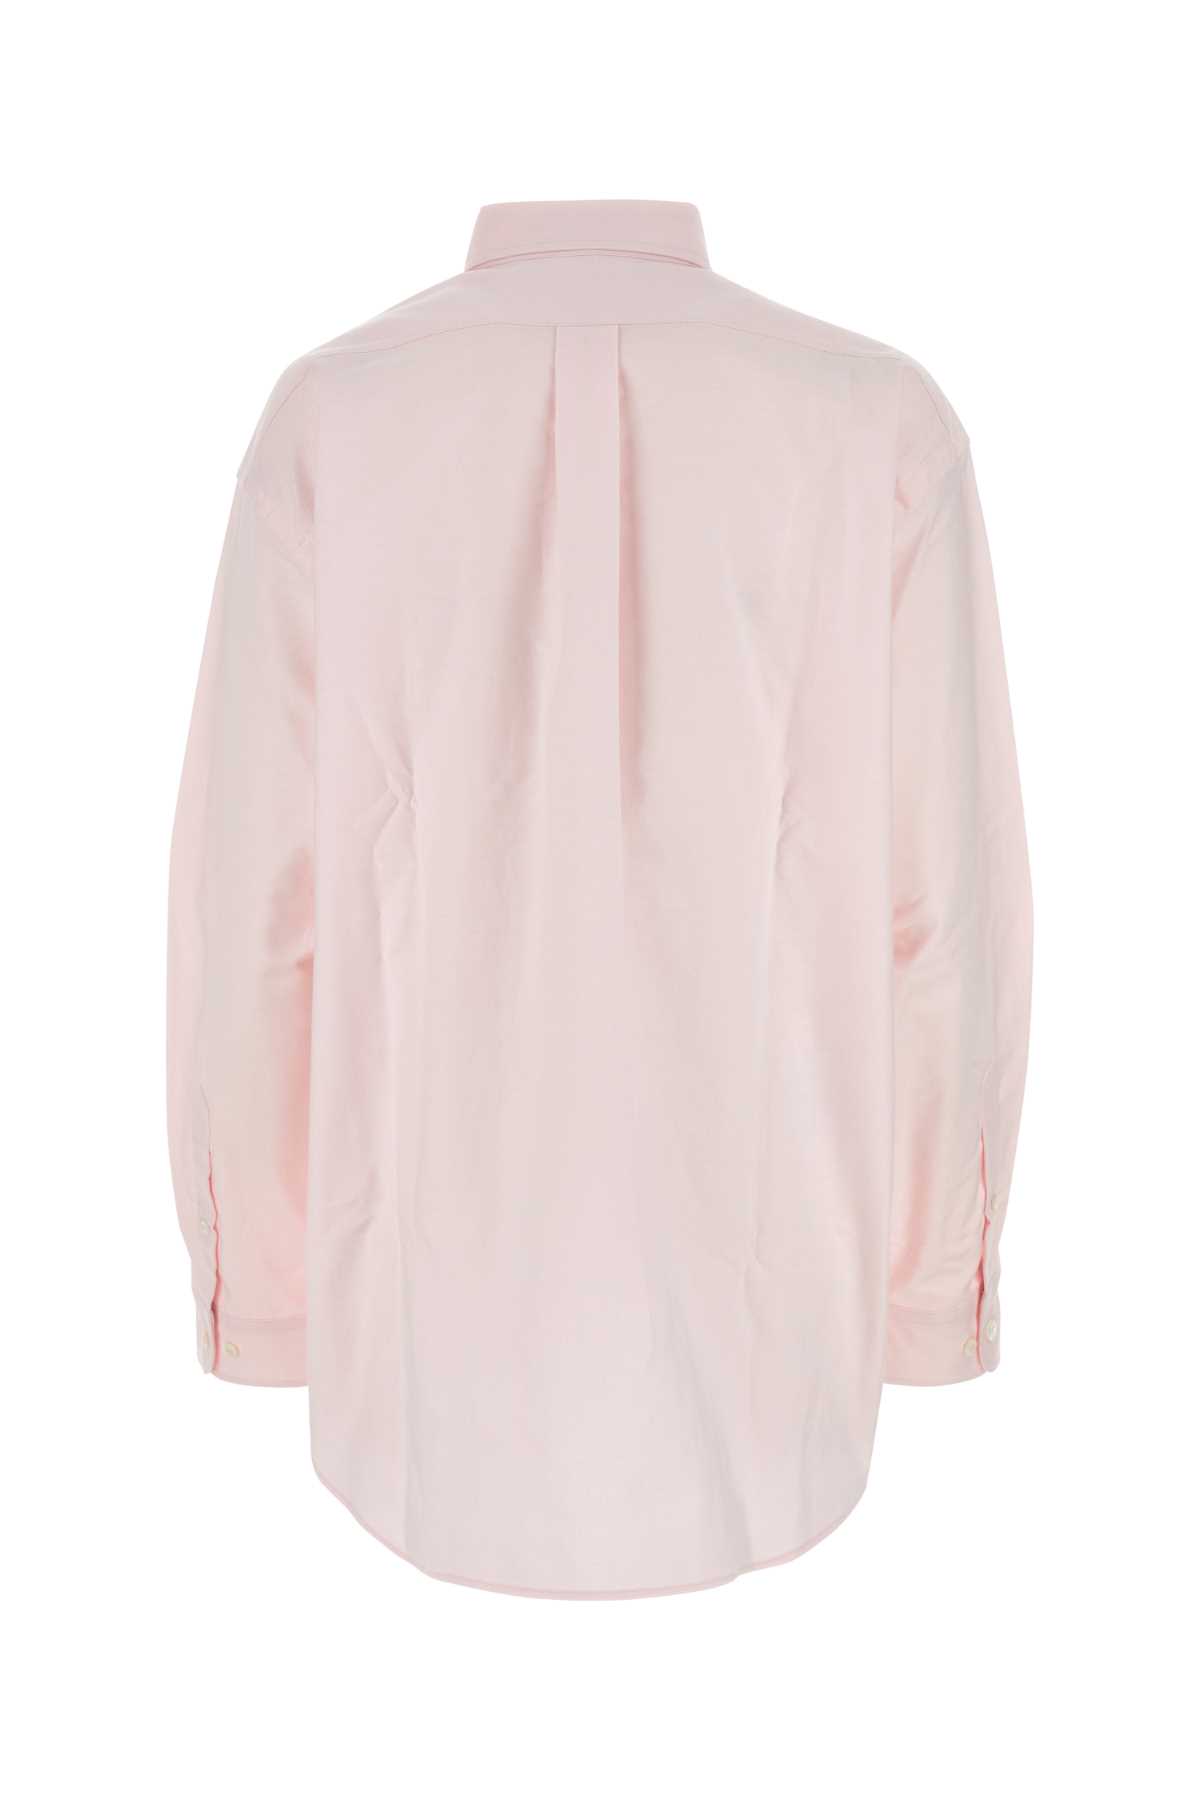 Prada Light Pink Oxford Oversize Shirt In Rosa